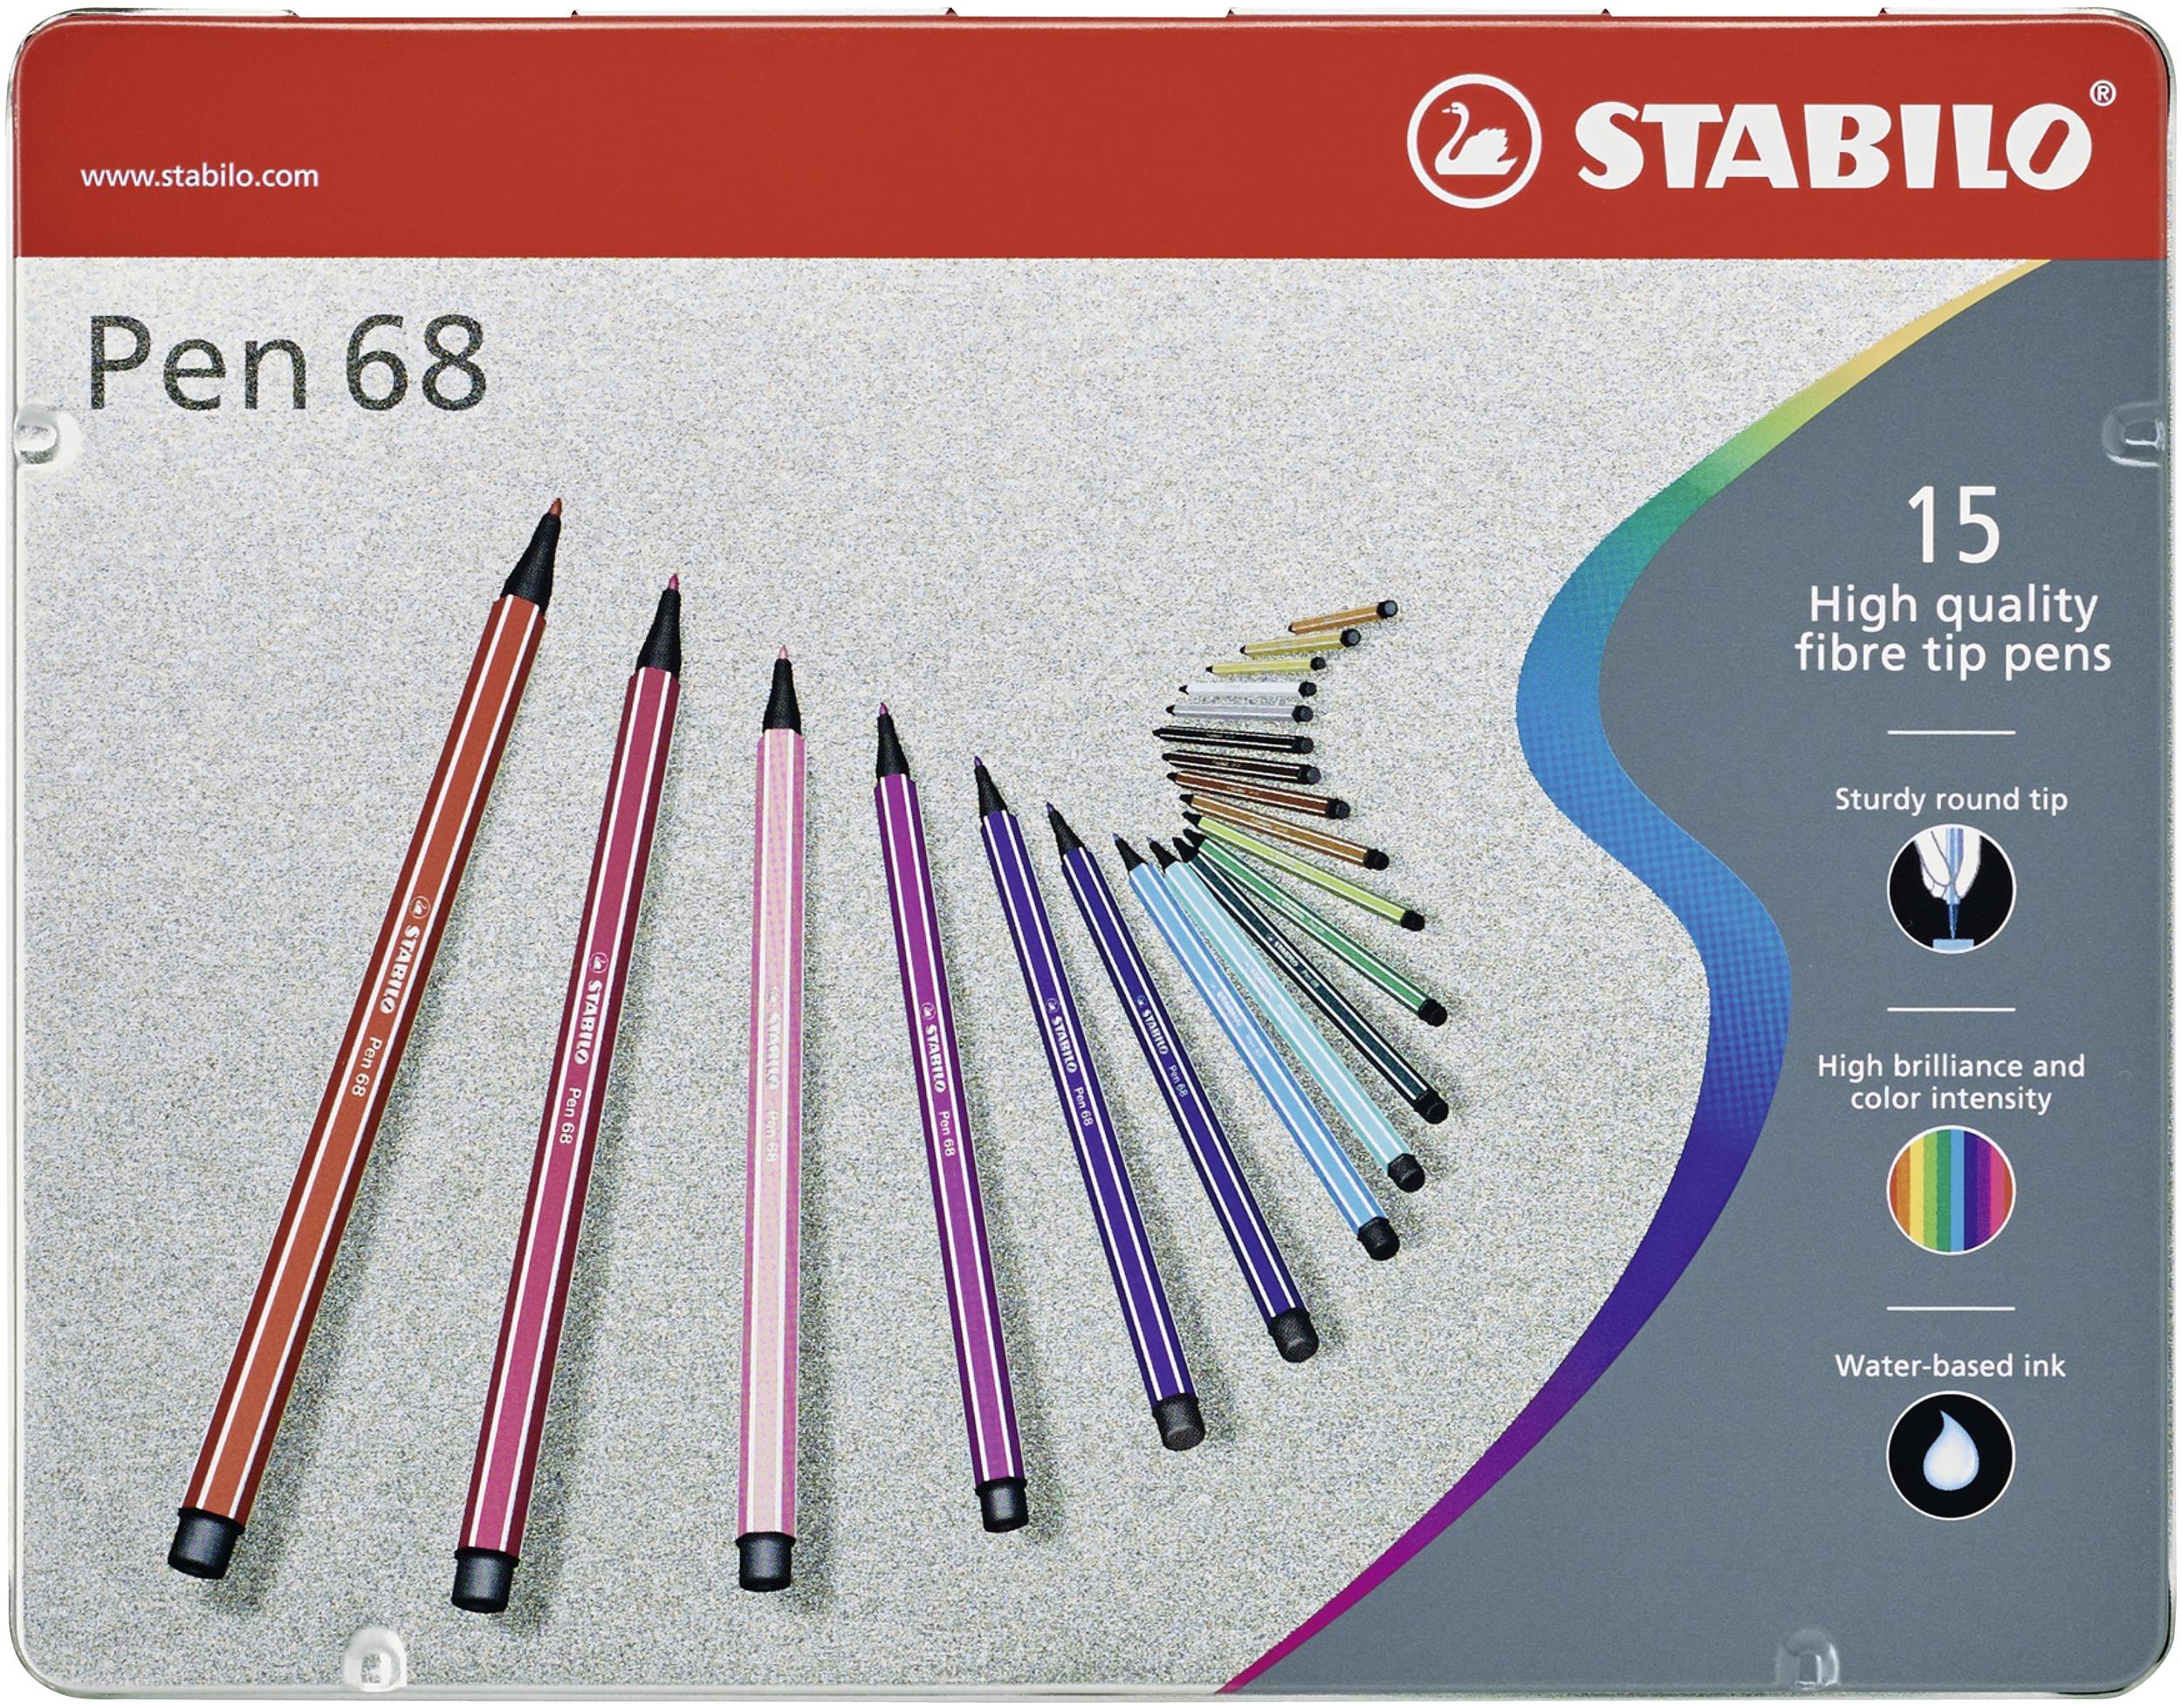 Pennarello Premium STABILO Pen